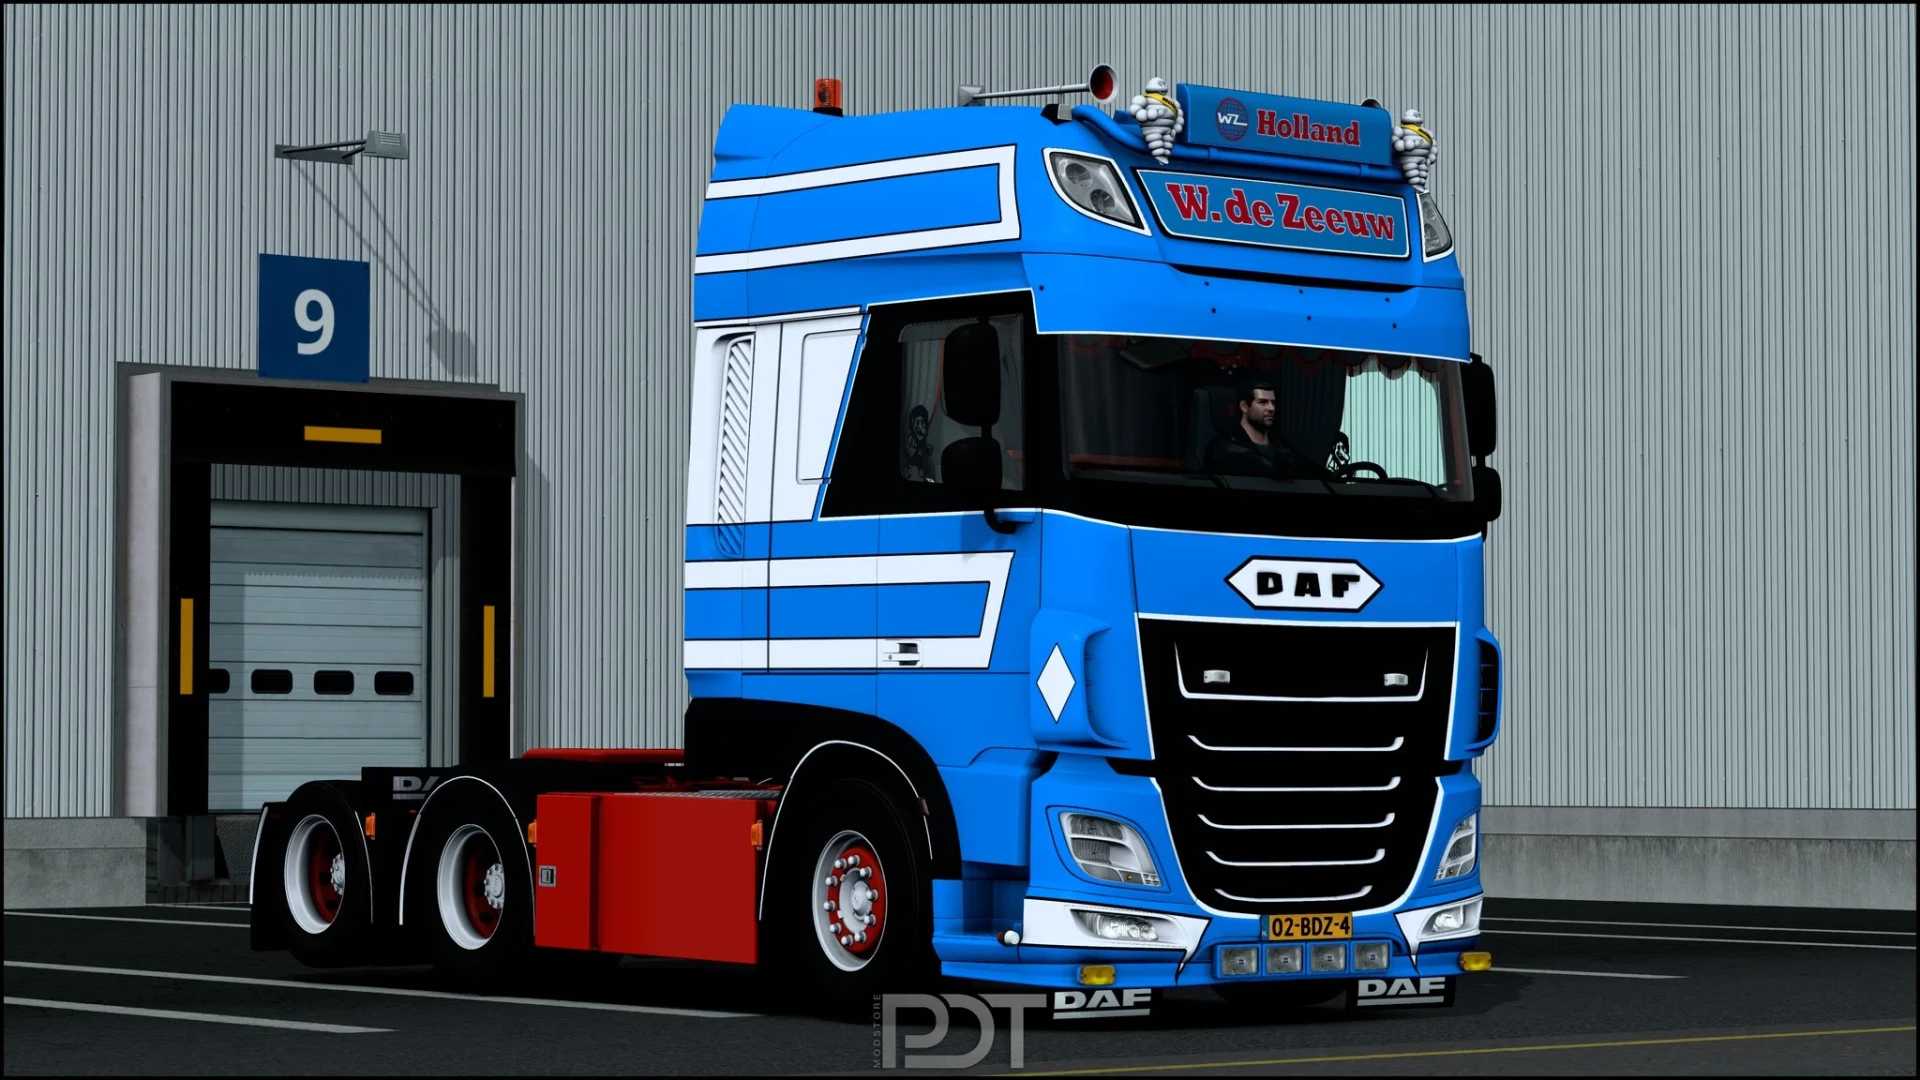 Daf Xf 116 “william De Zeeuw” 147 Ets2 Mods Euro Truck Simulator 2 Mods Ets2modslt 1978